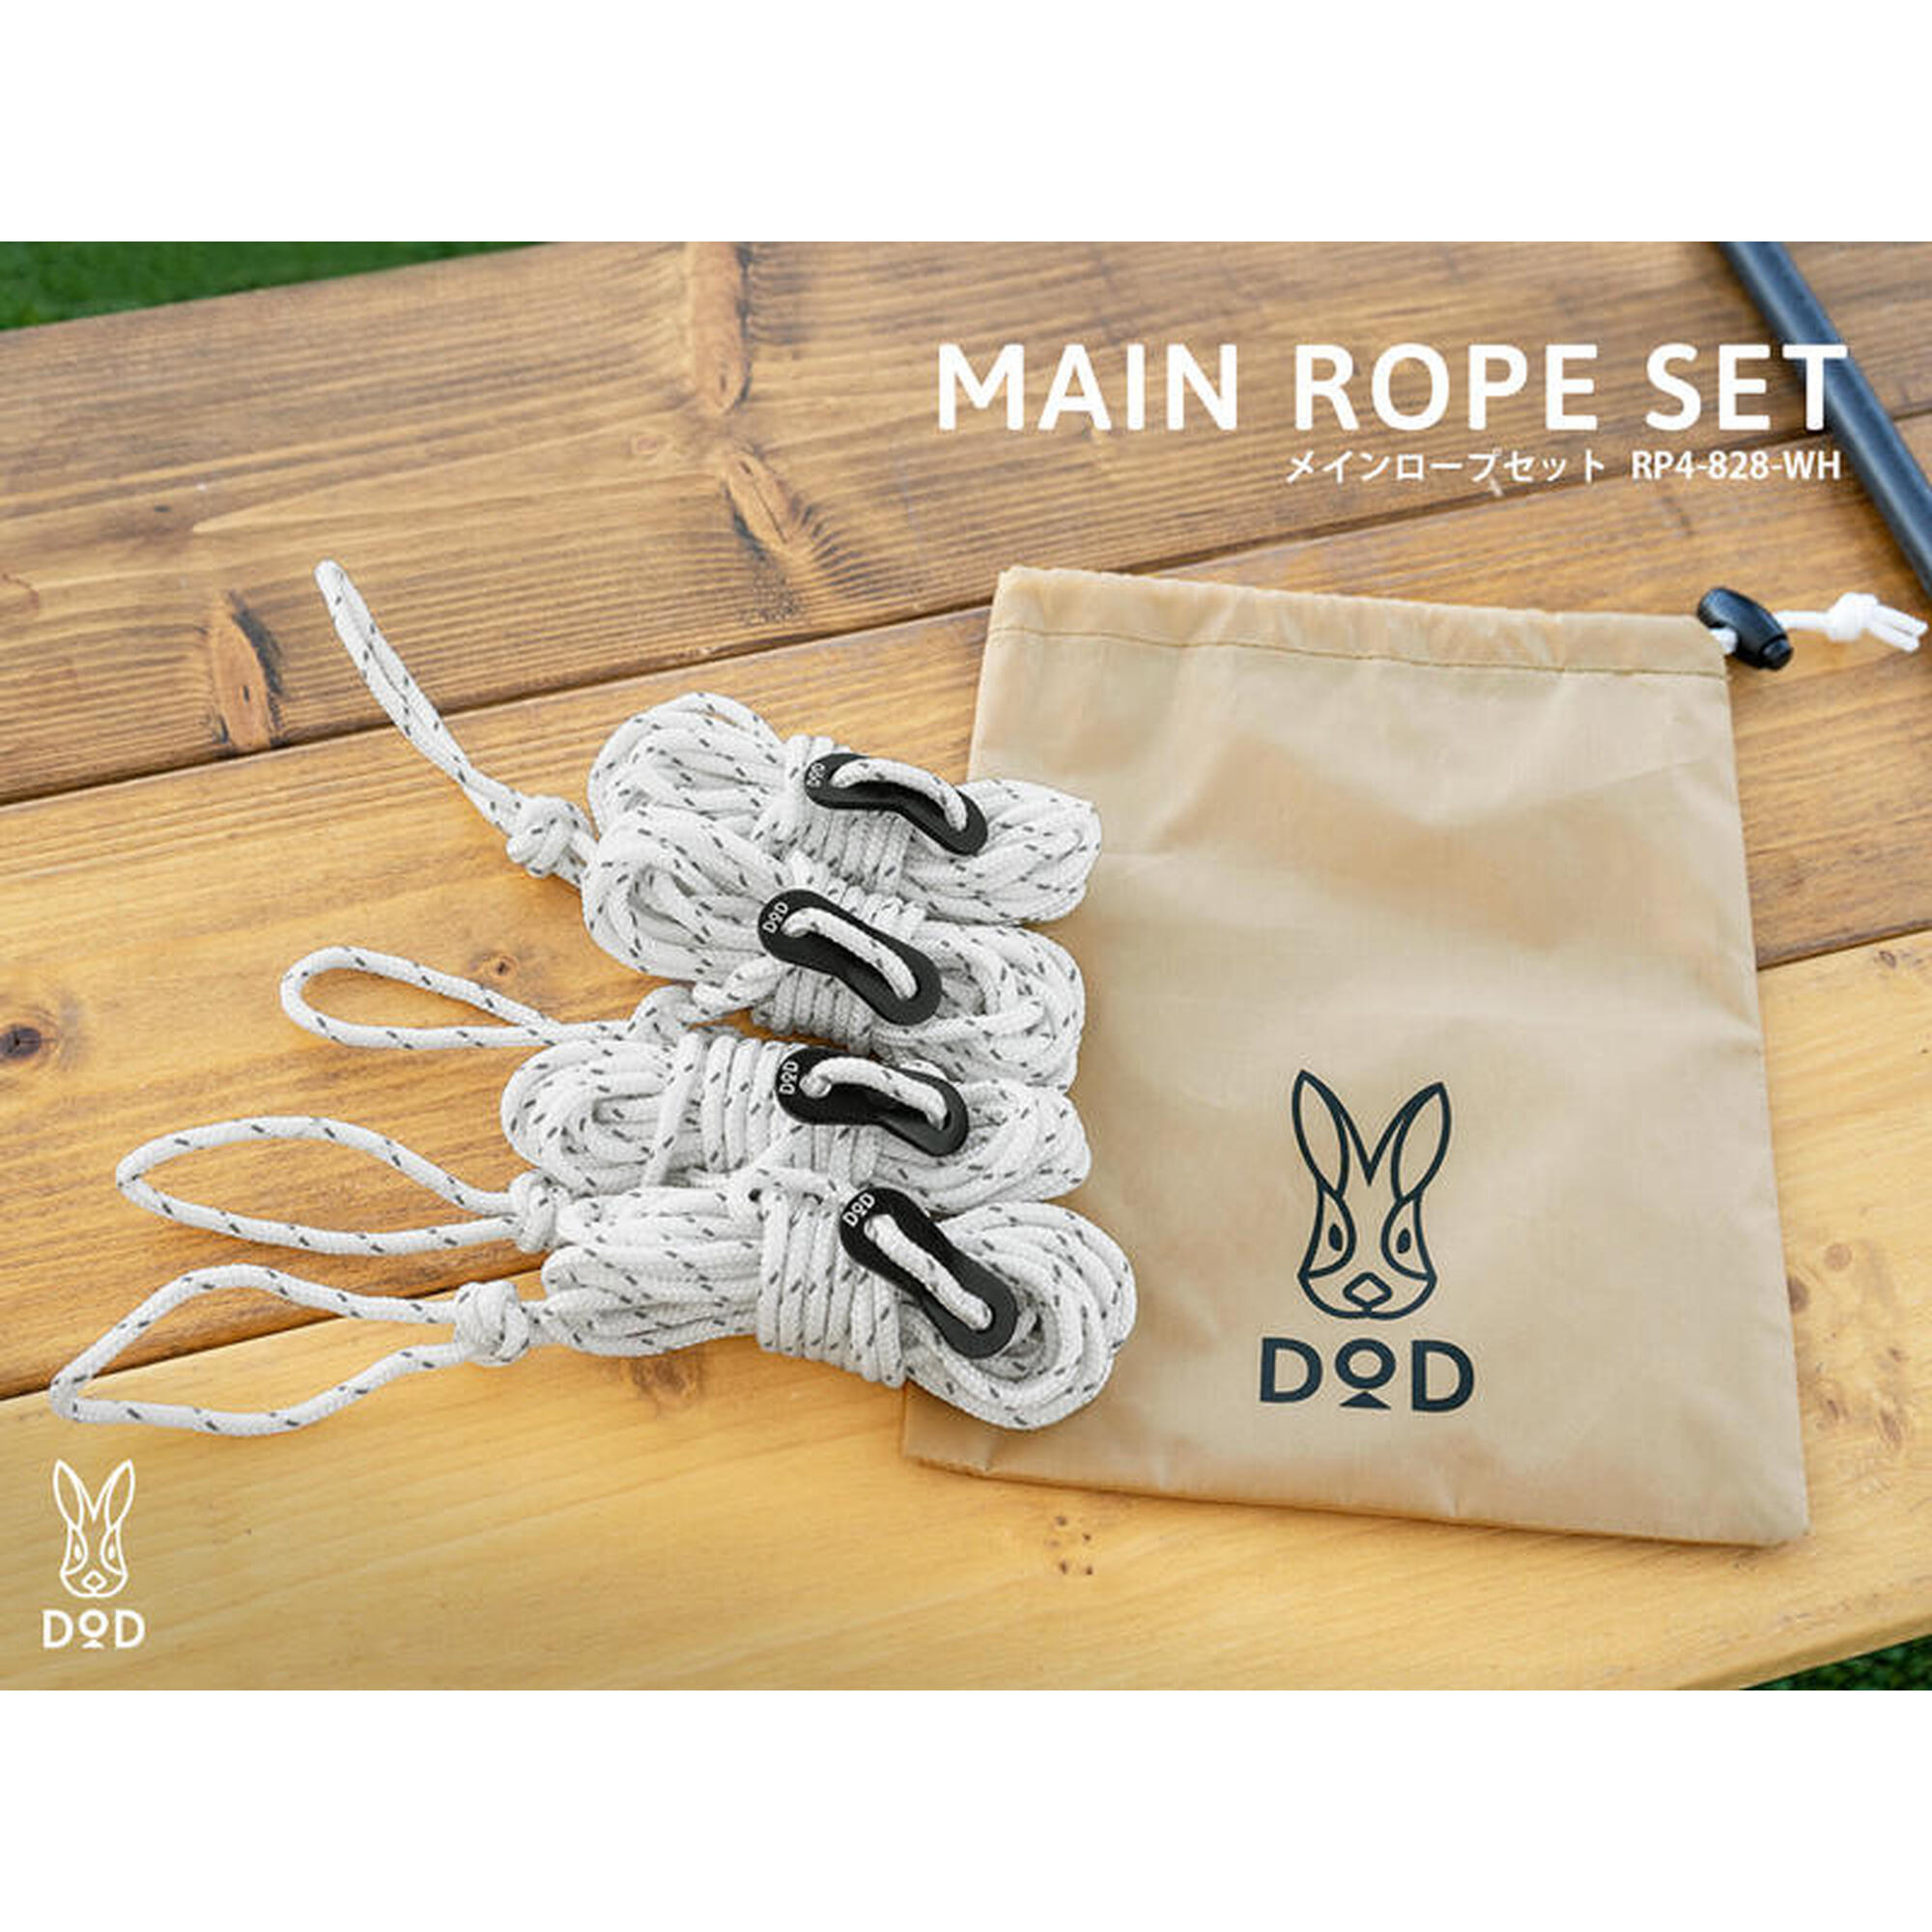 Main Rope Set 4M - Red